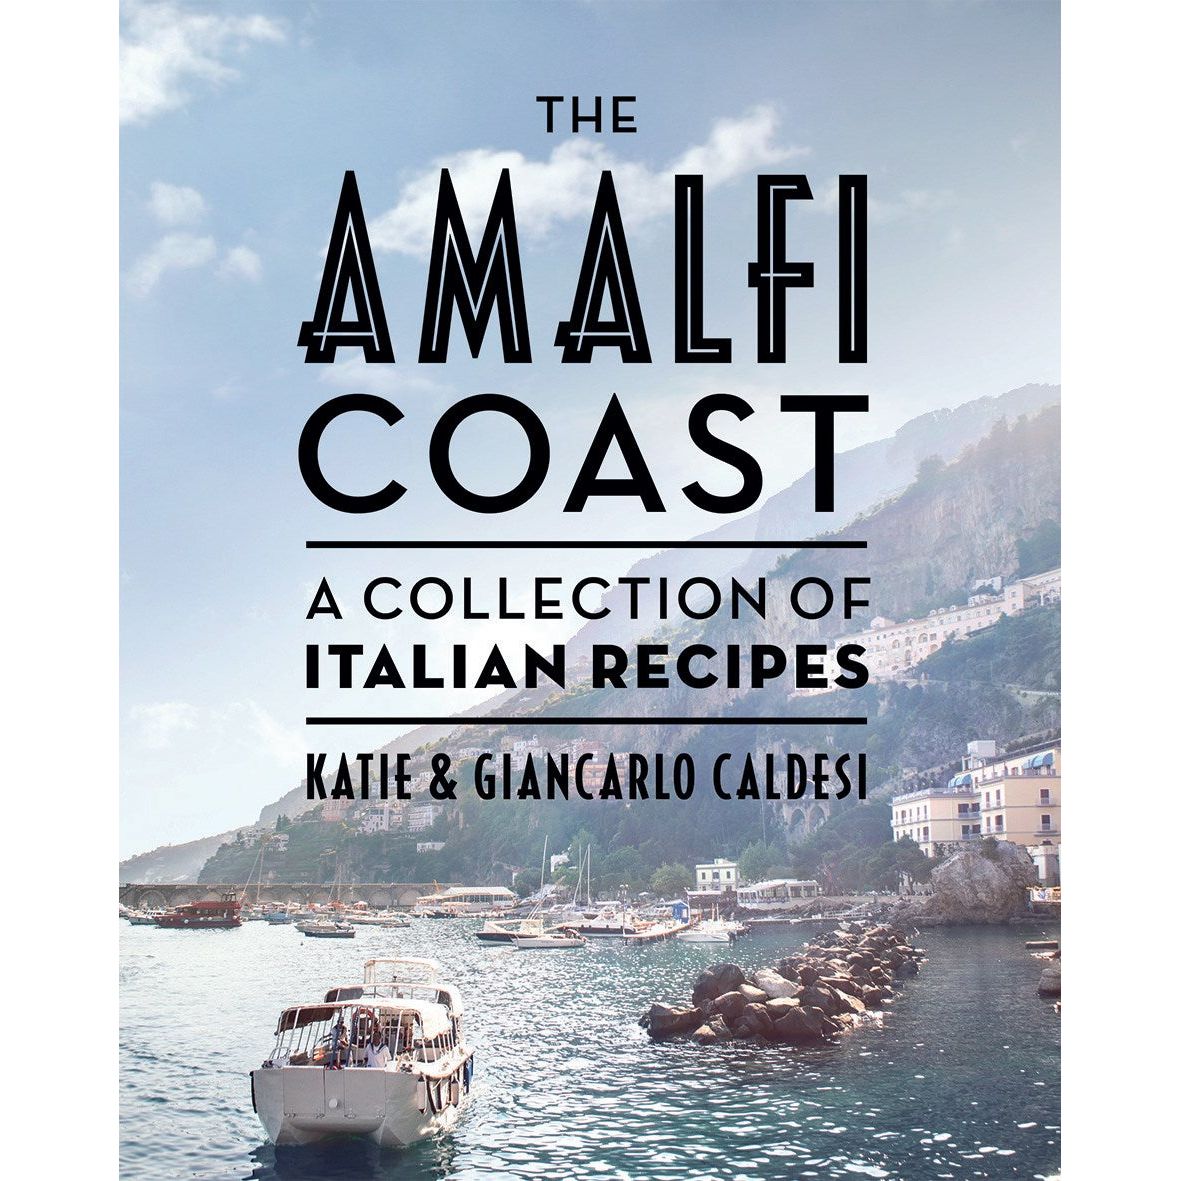 The Amalfi Coast (Katie & Giancarlo Caldesi)